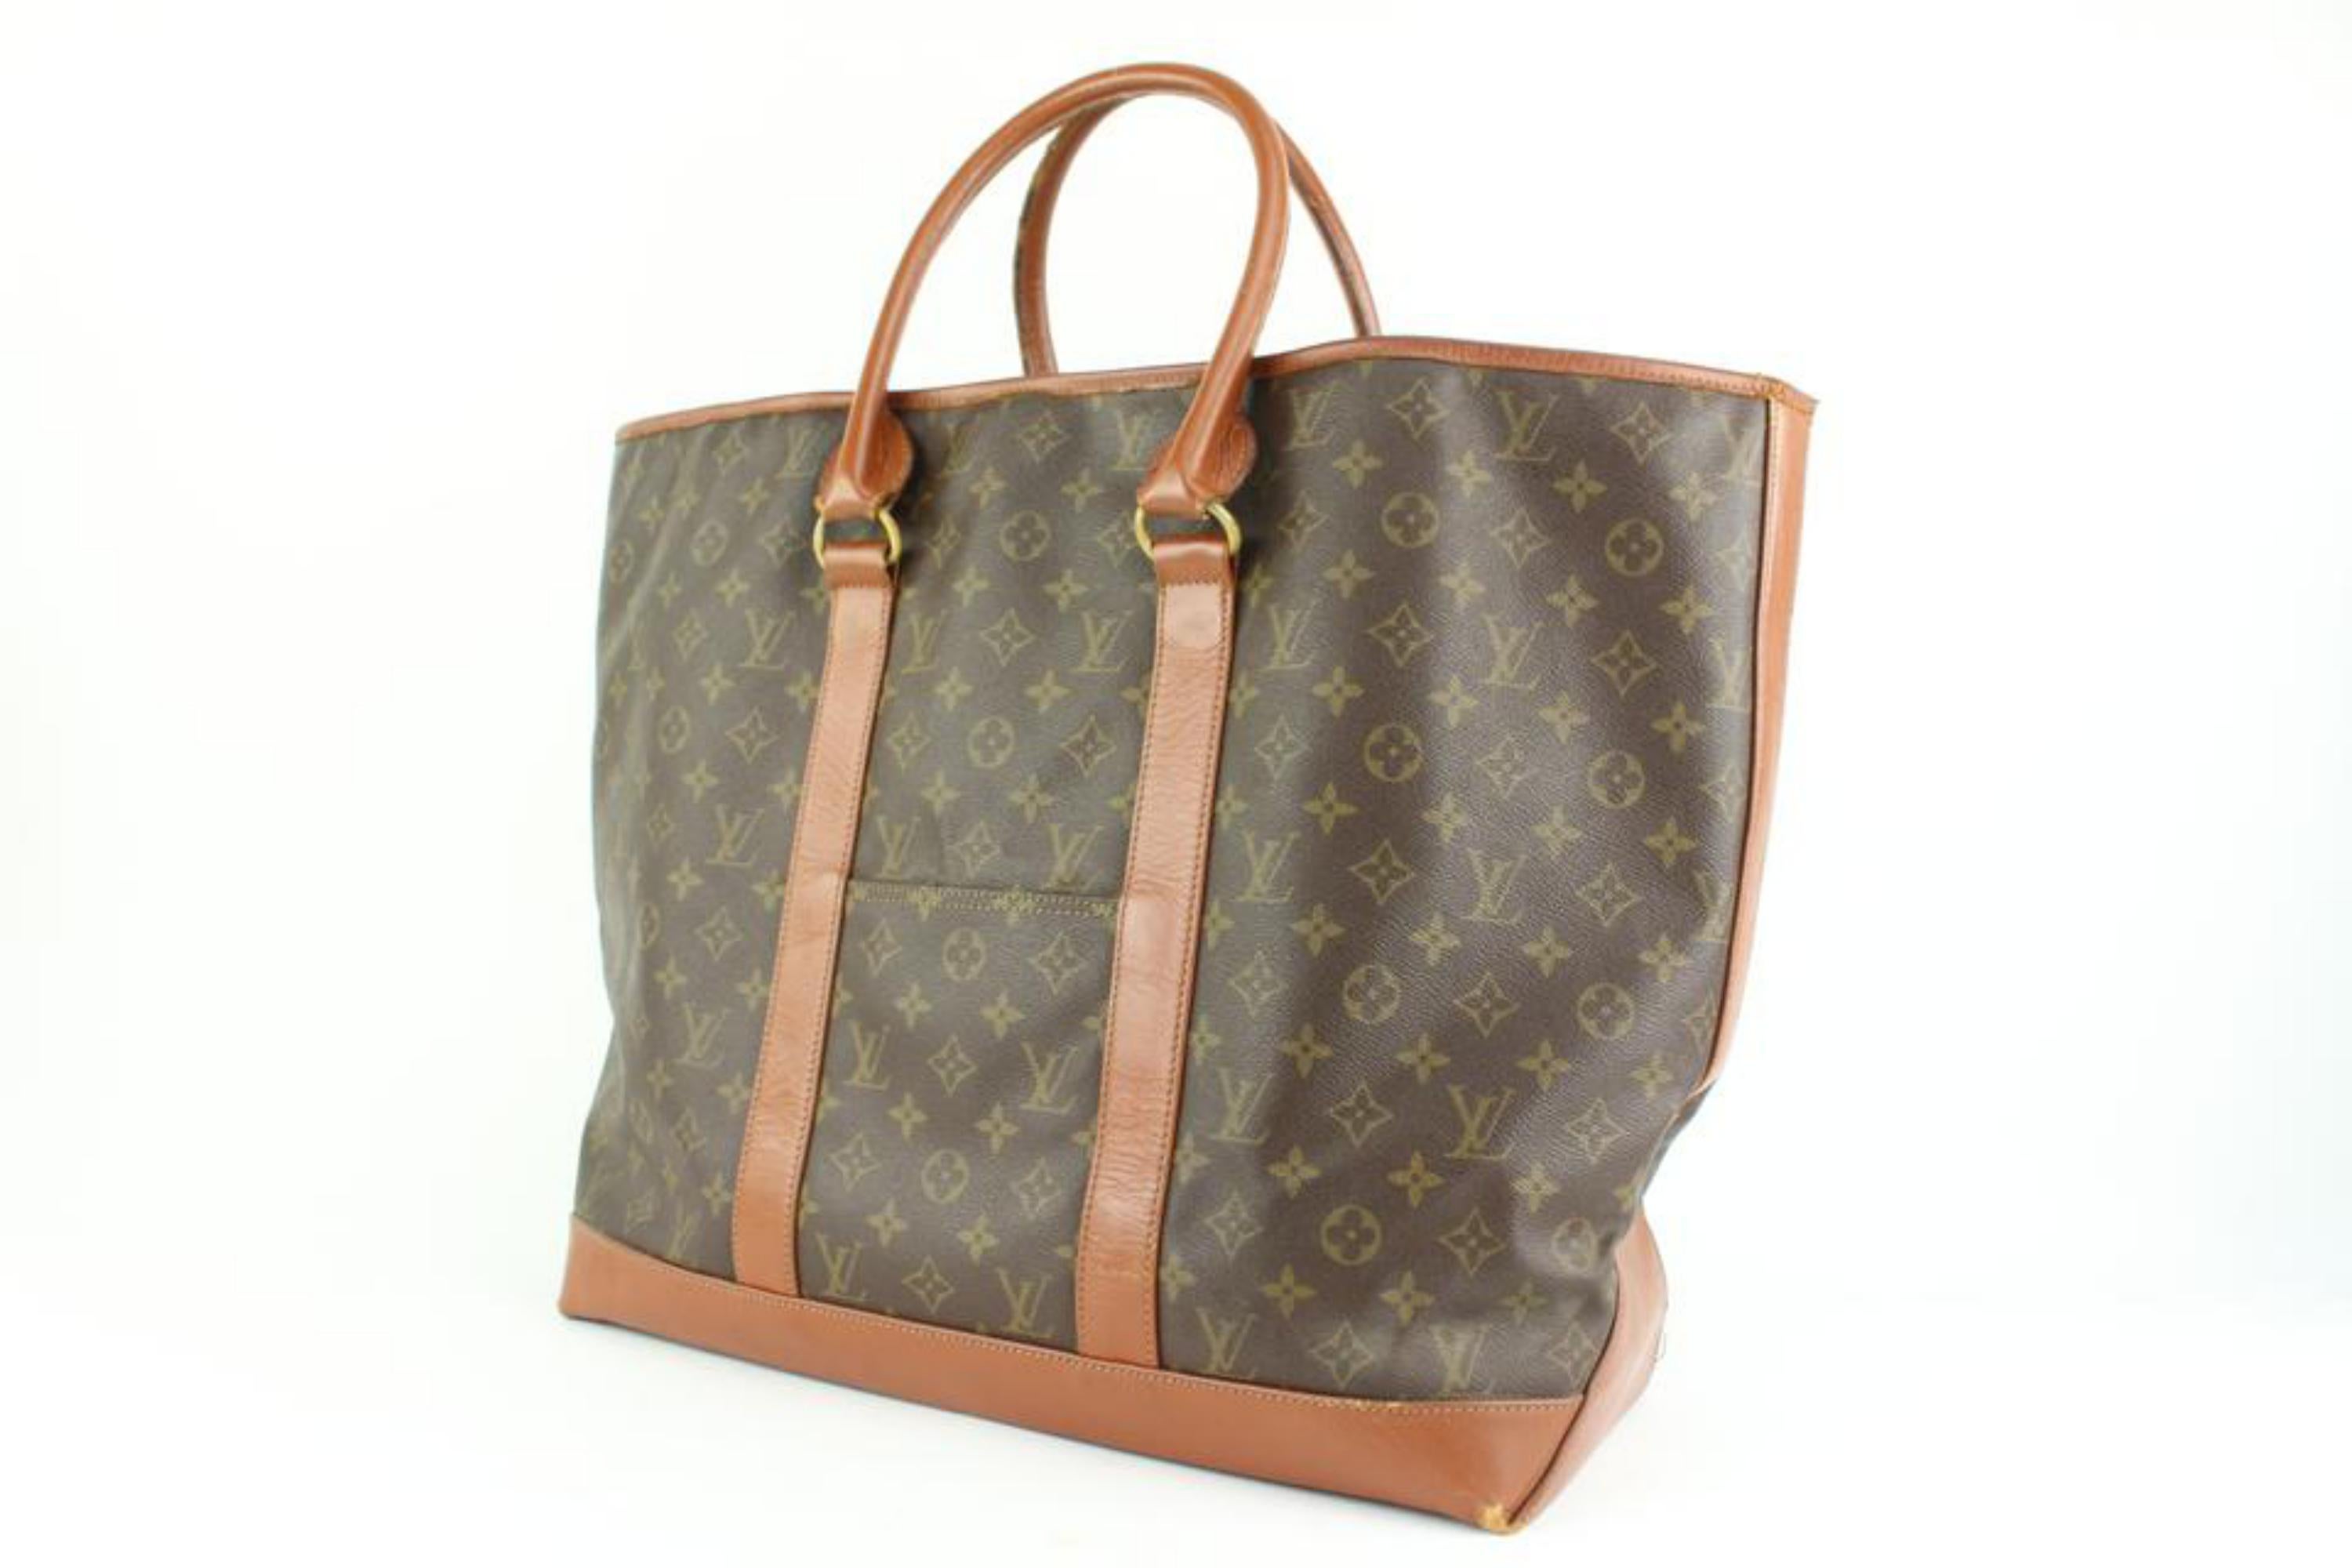 Louis Vuitton XL Monogram Sac Weekend GM Tote Bag 113lv53
Date Code/Serial Number: 824
Made In: France
Measurements: Length:  22